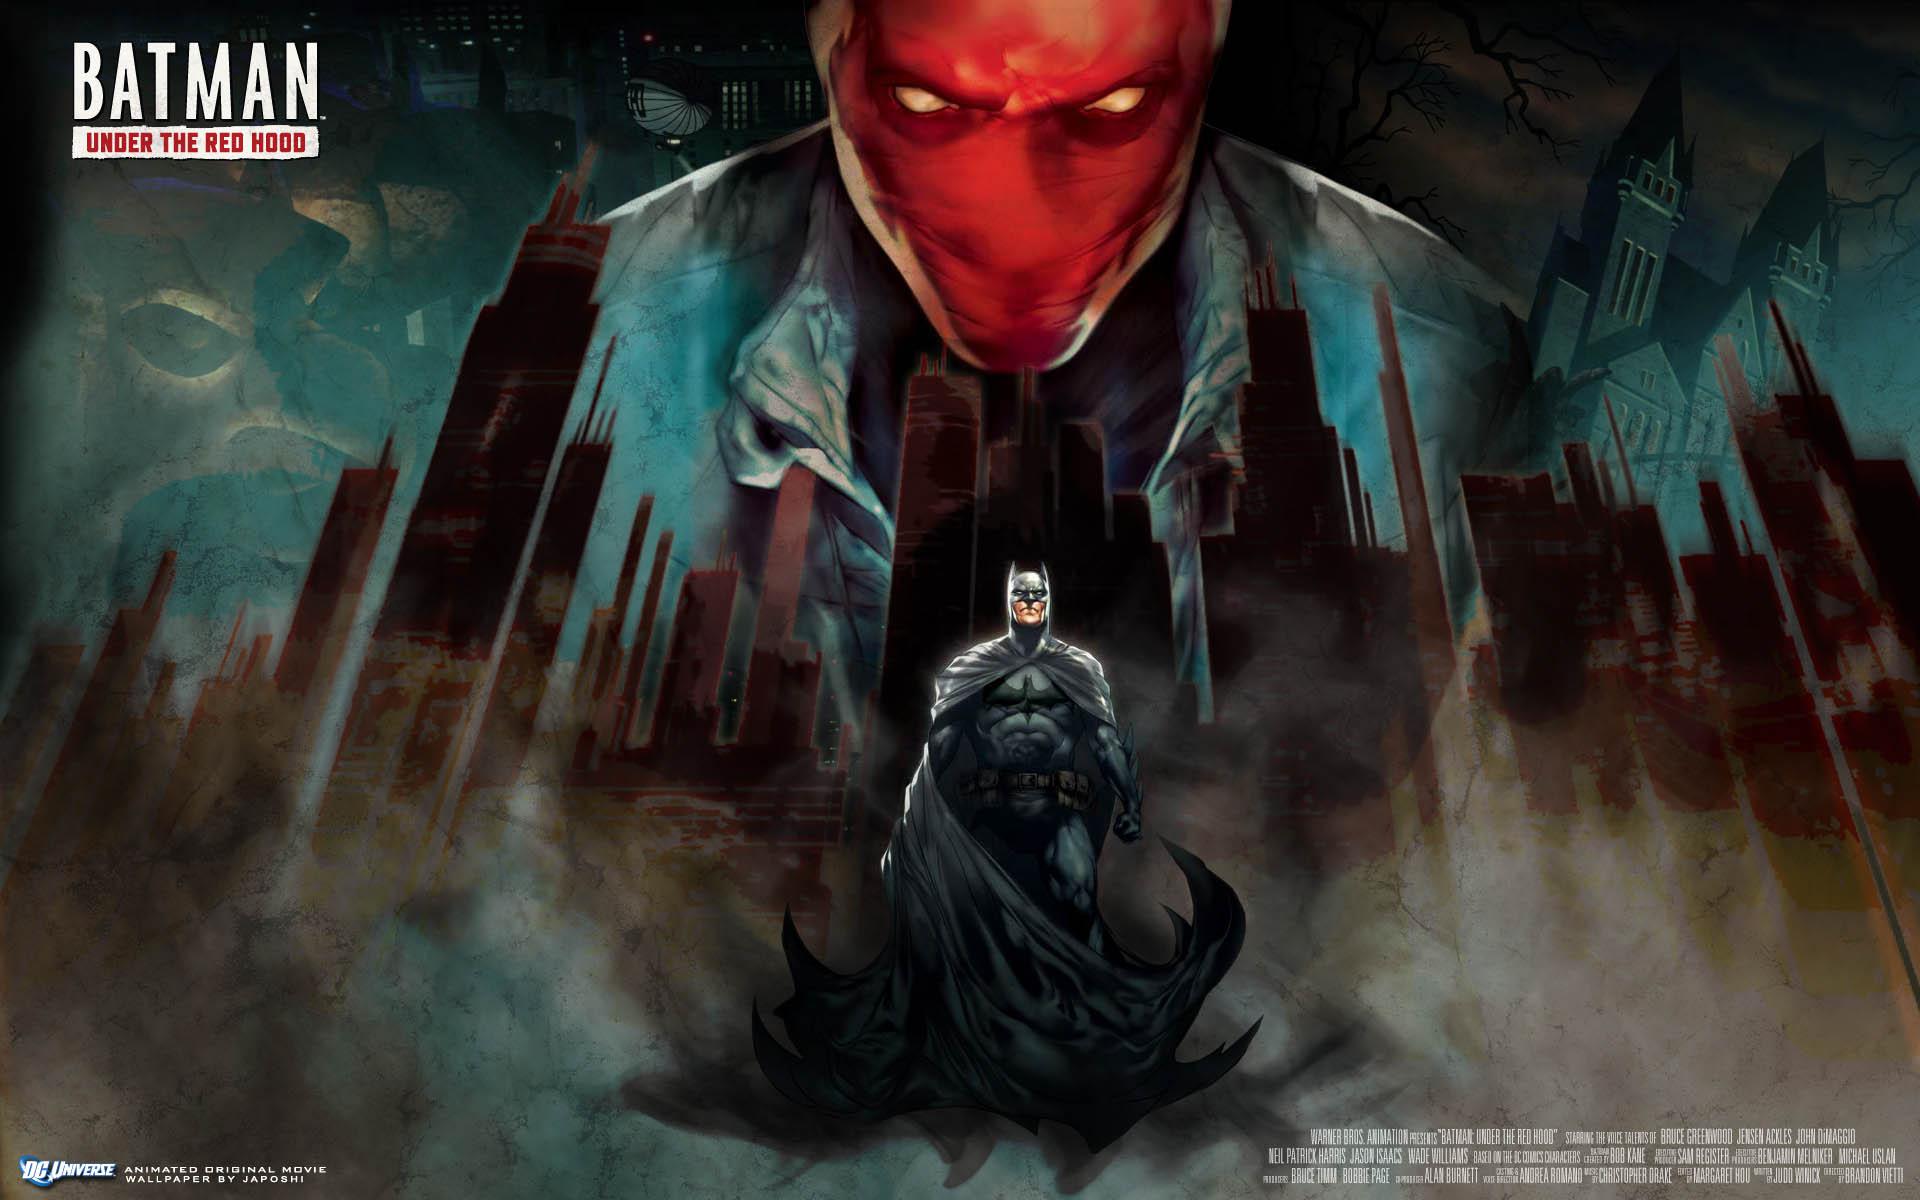 Capucha Roja se une al reparto de Batman: Arkham Knight - MeriStation